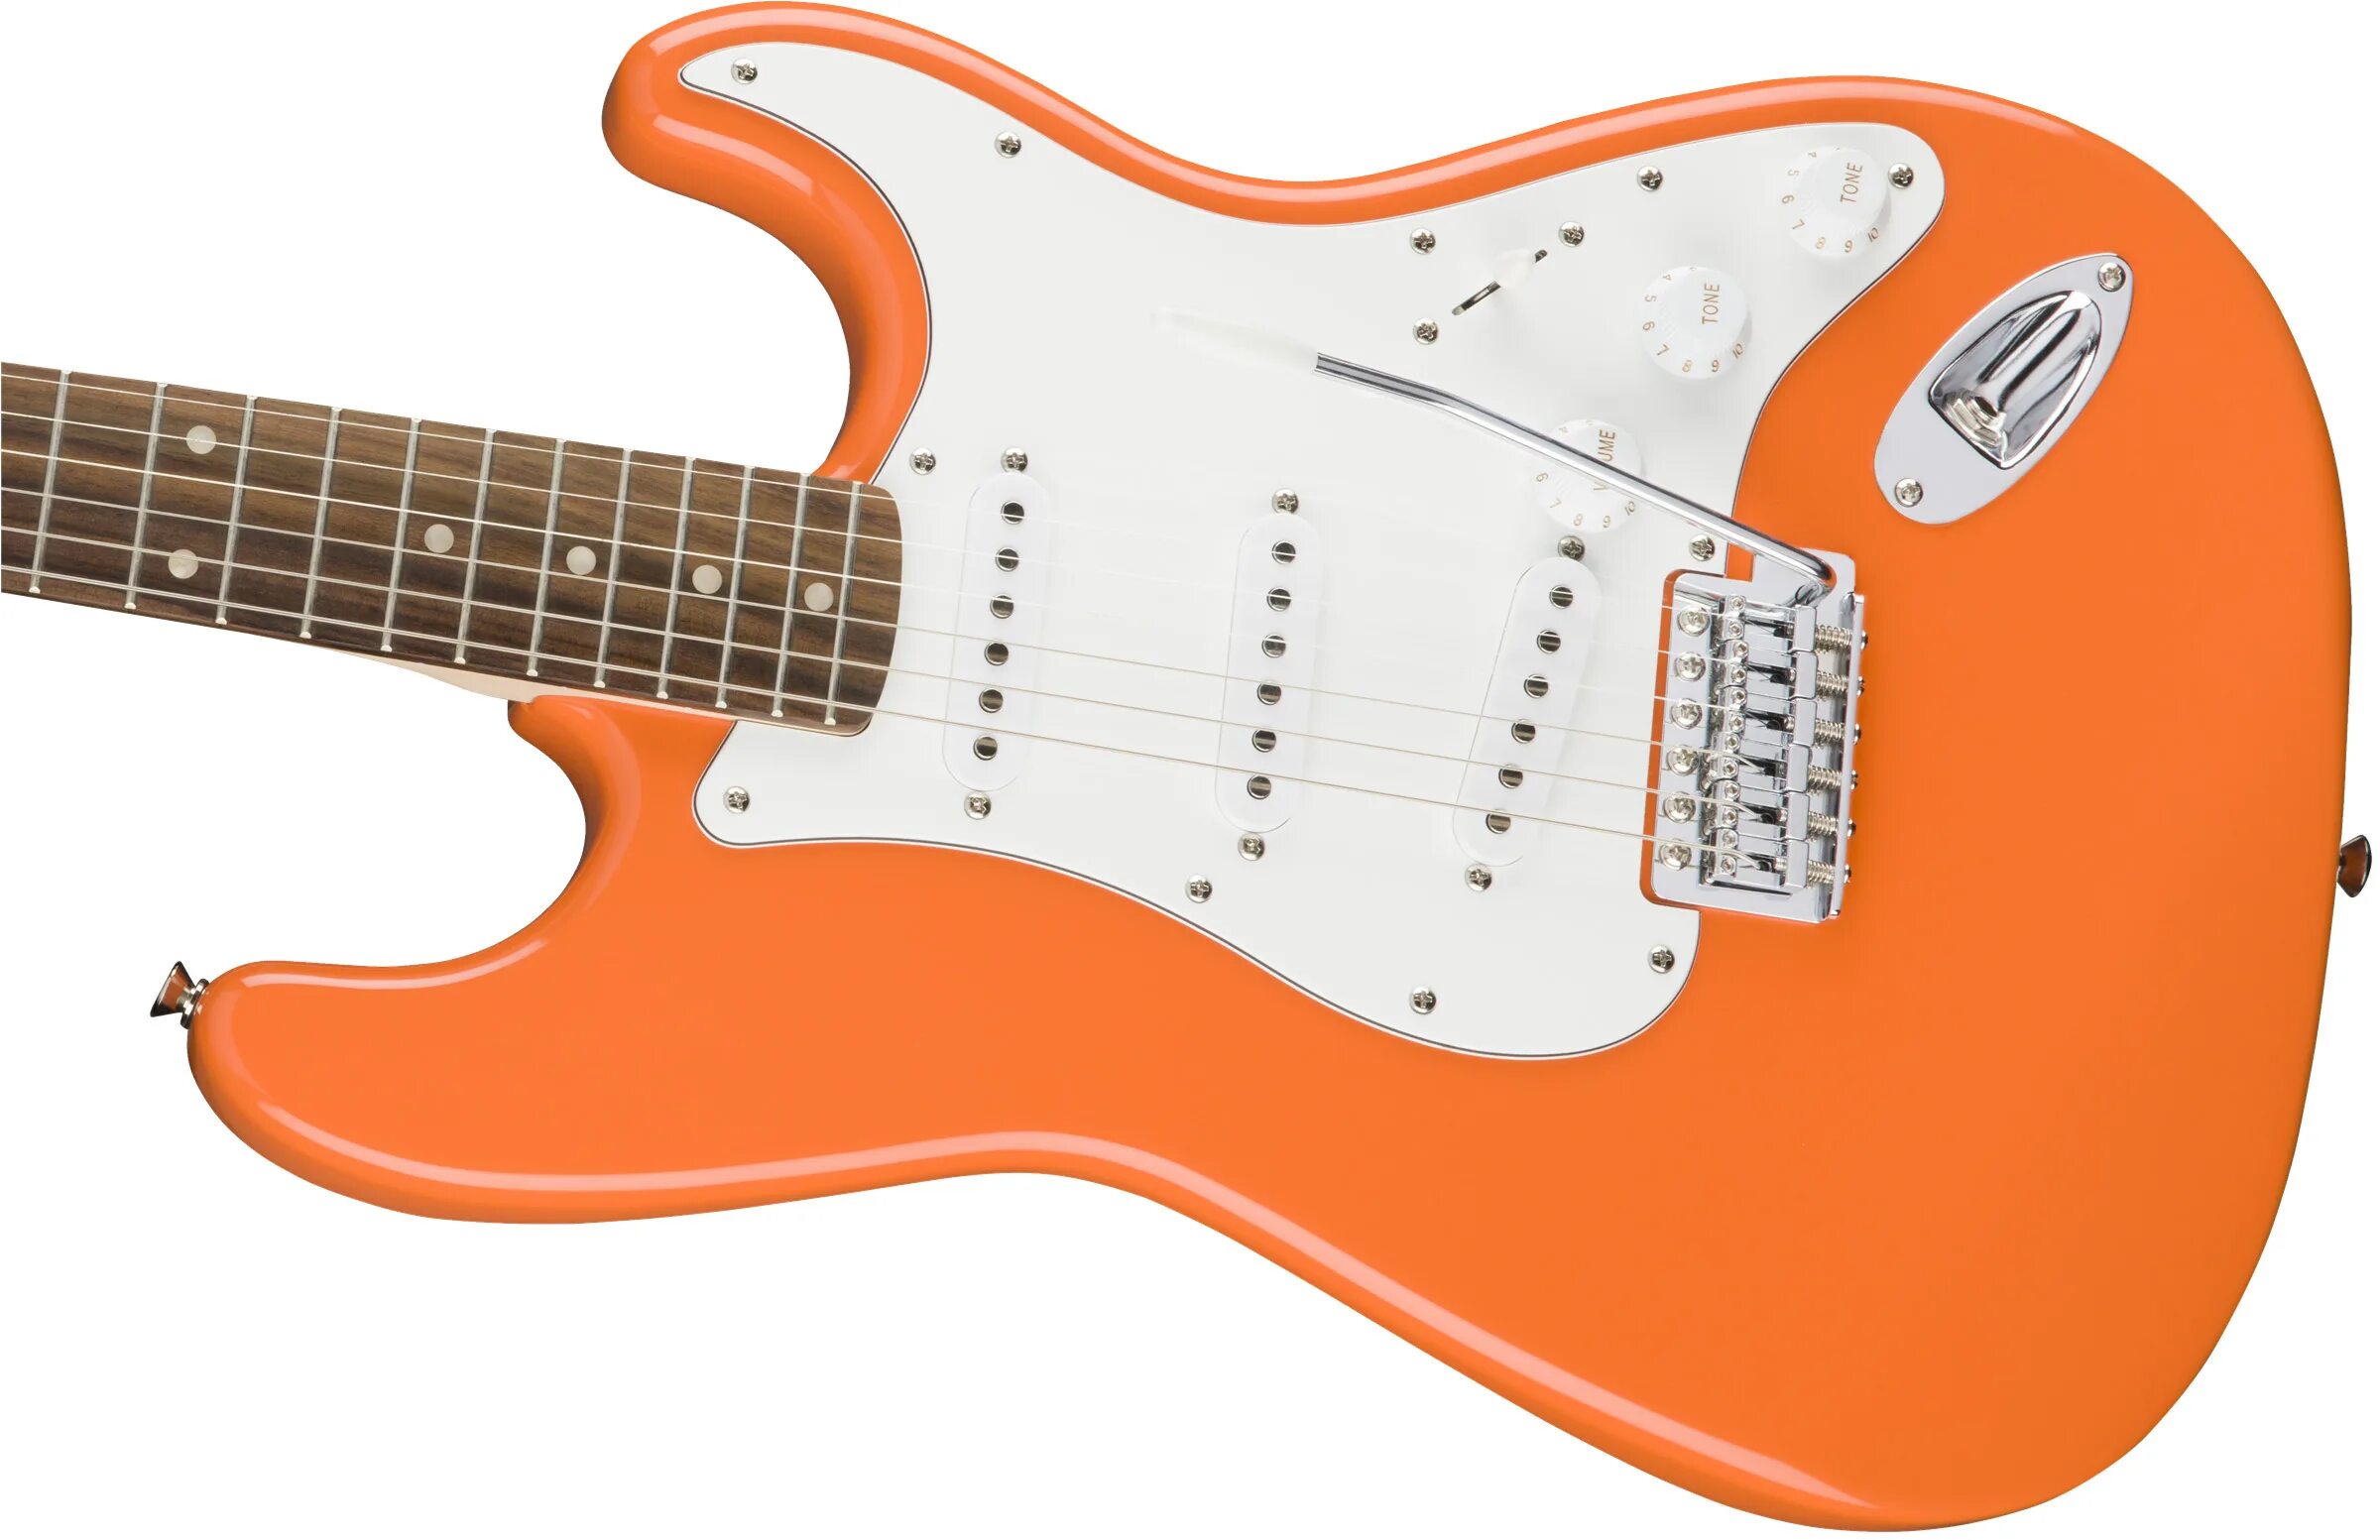 Squier affinity stratocaster. Электрогитара Fender Squier Affinity Stratocaster - Competit. Гитара Fender Squier Stratocaster Affinity. Squier Affinity. Оранжевый Фендер бас гитара.